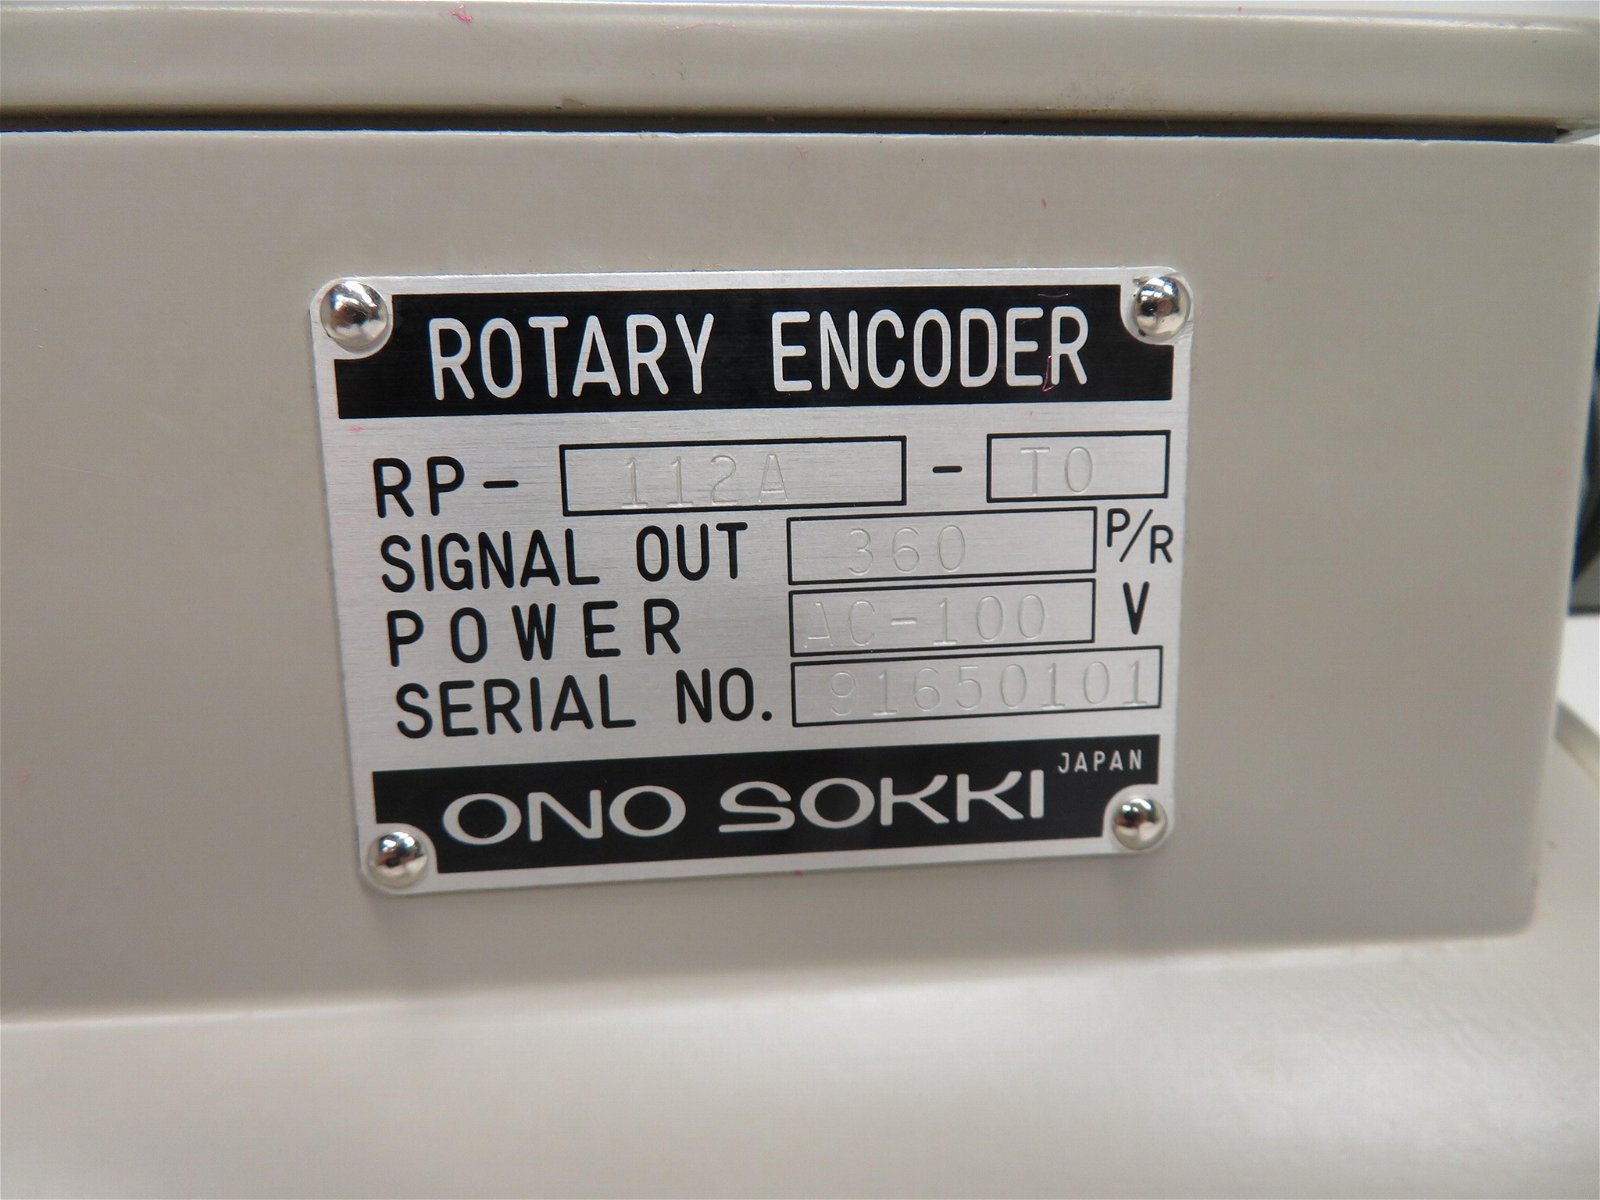 ONO SOKKI Rotary encoder Type RP-112A-TO 2